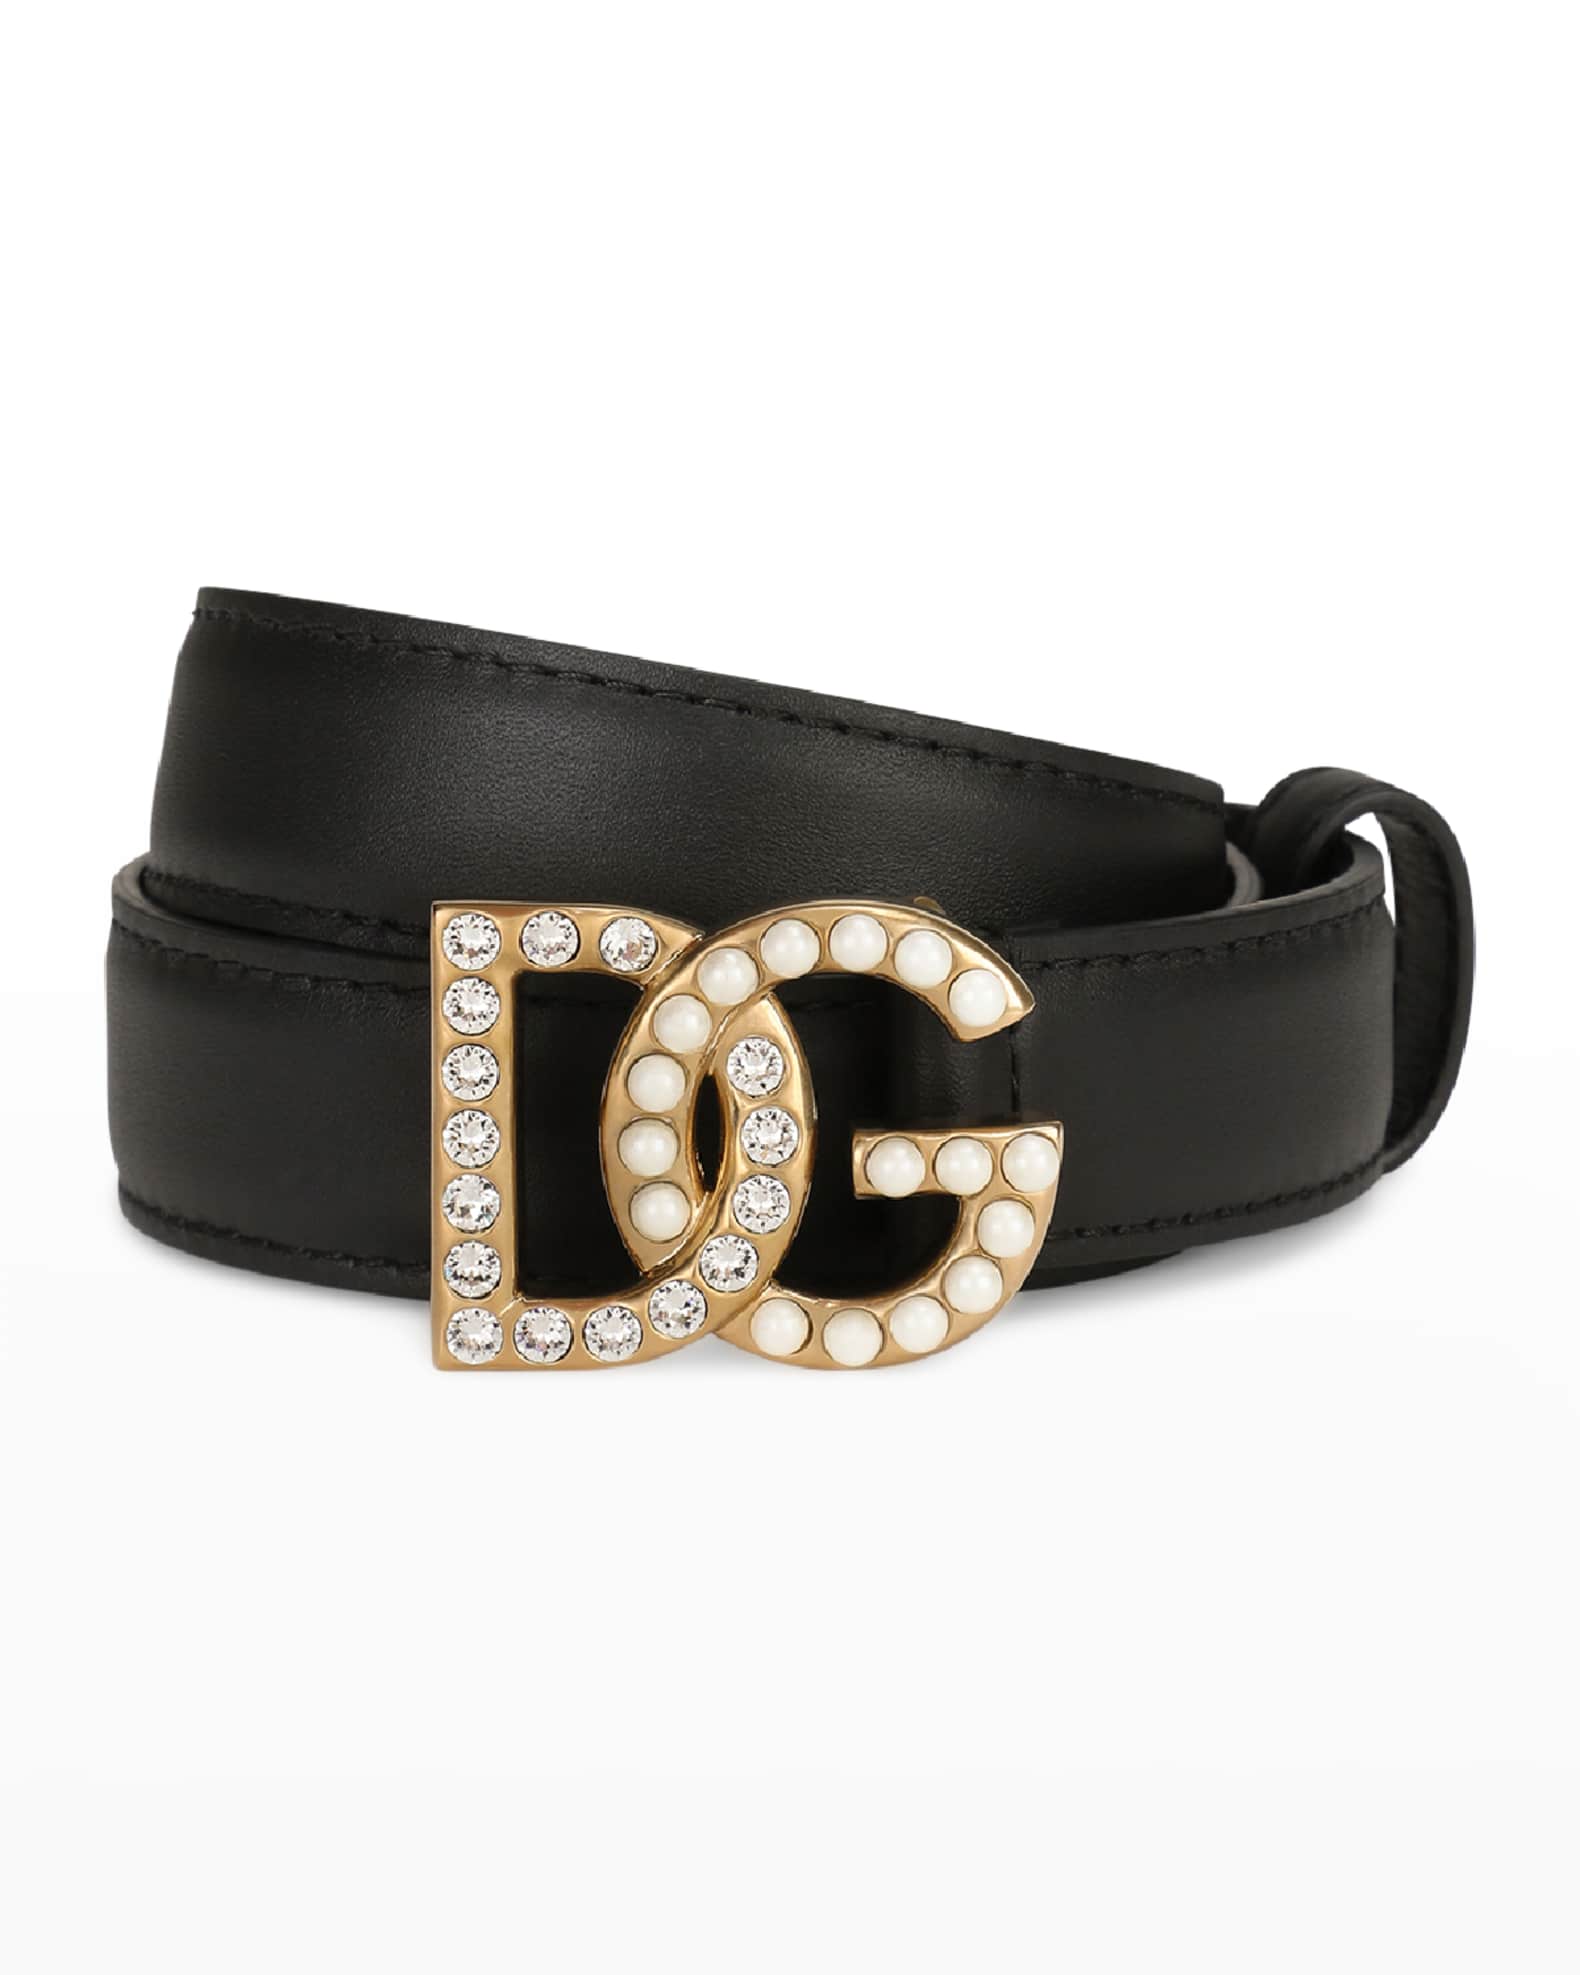 Dolce & Gabbana Worn Leather Large DG Belt Black